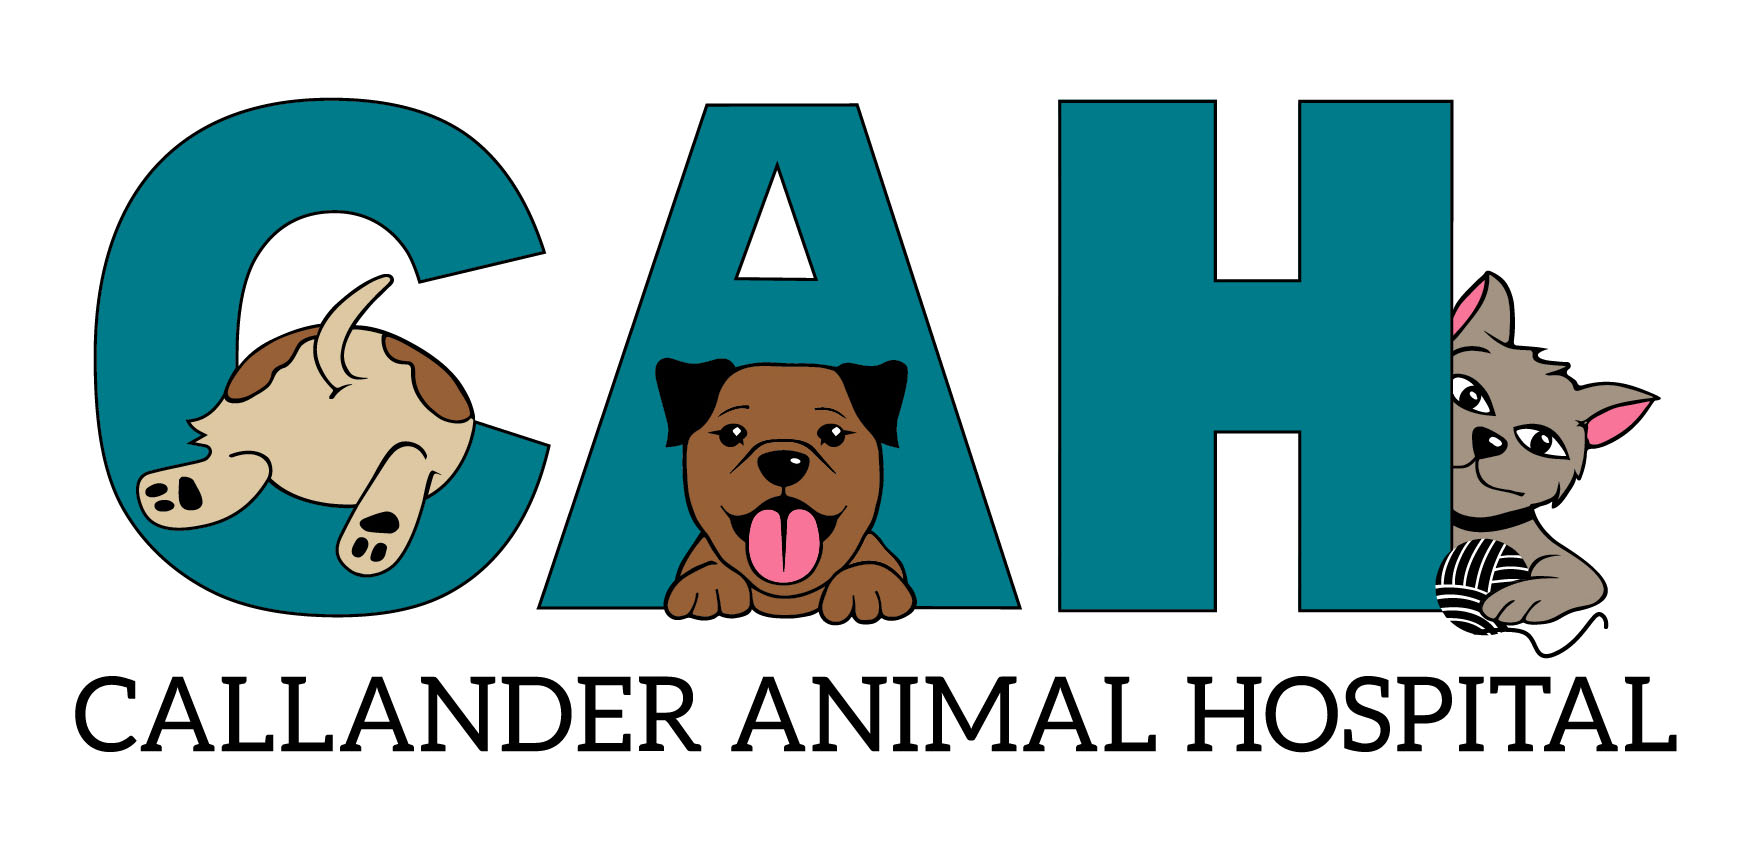 Callander Animal Hospital